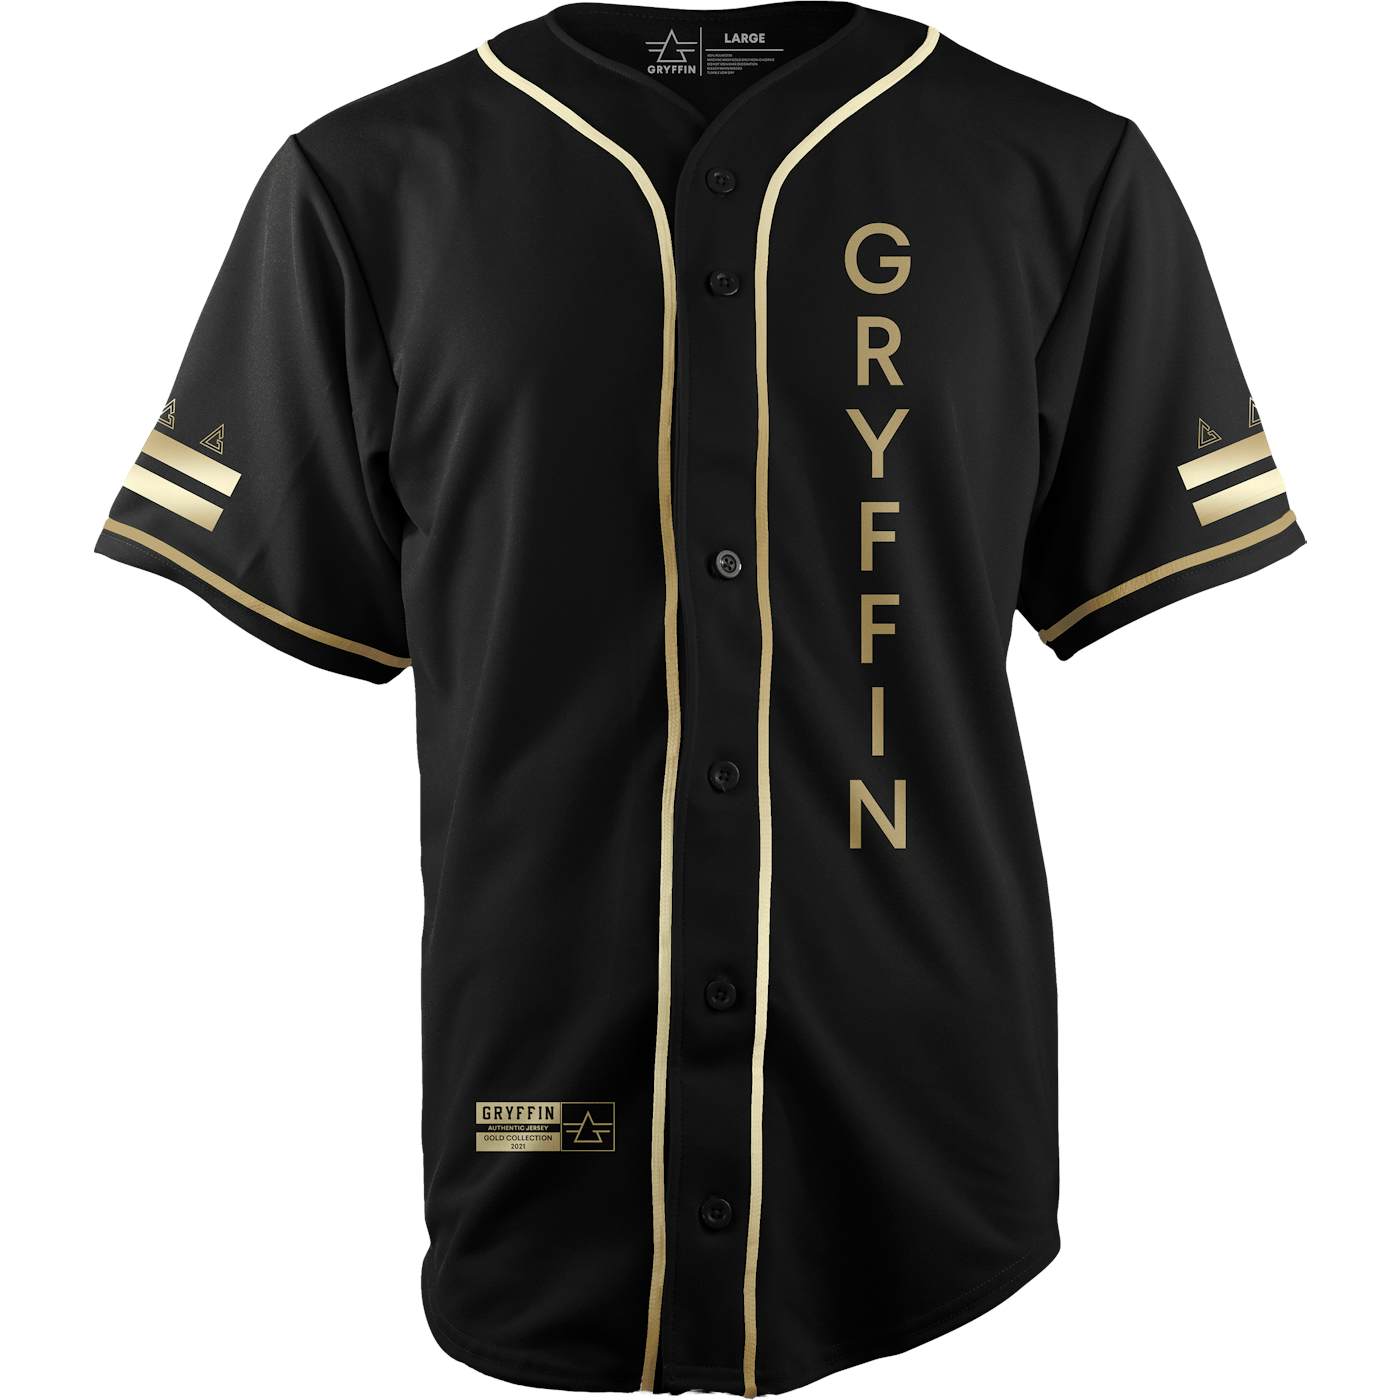 Gryffin Jersey // Black & Gold Collection - Version B